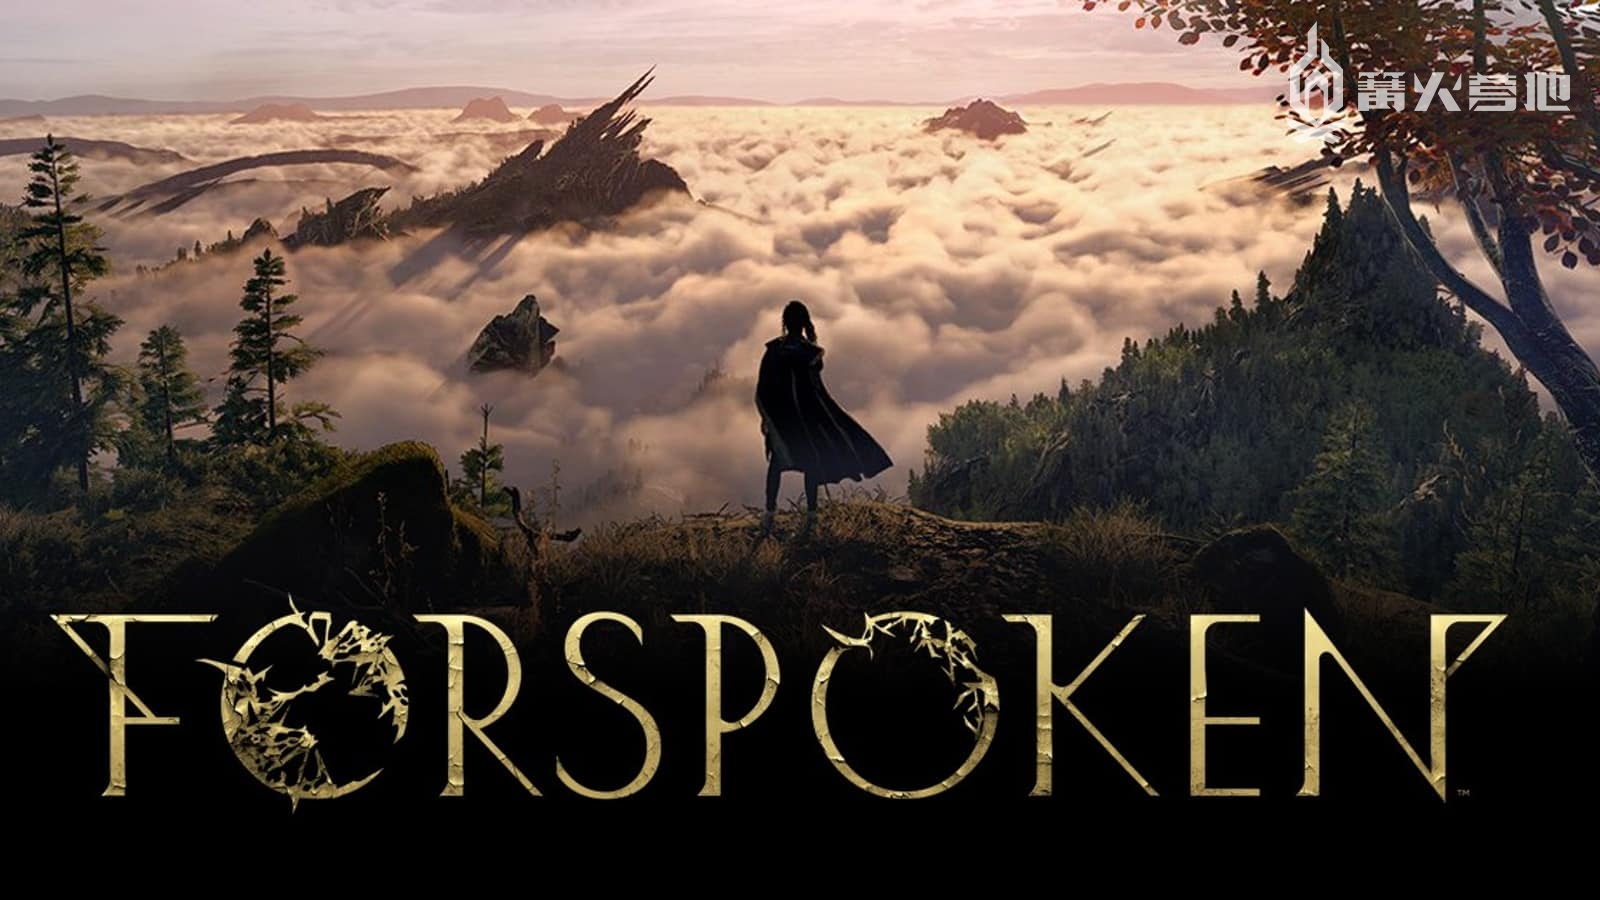 SE 宣布动作冒险游戏《Forspoken》将延后至 10 月 11 日推出